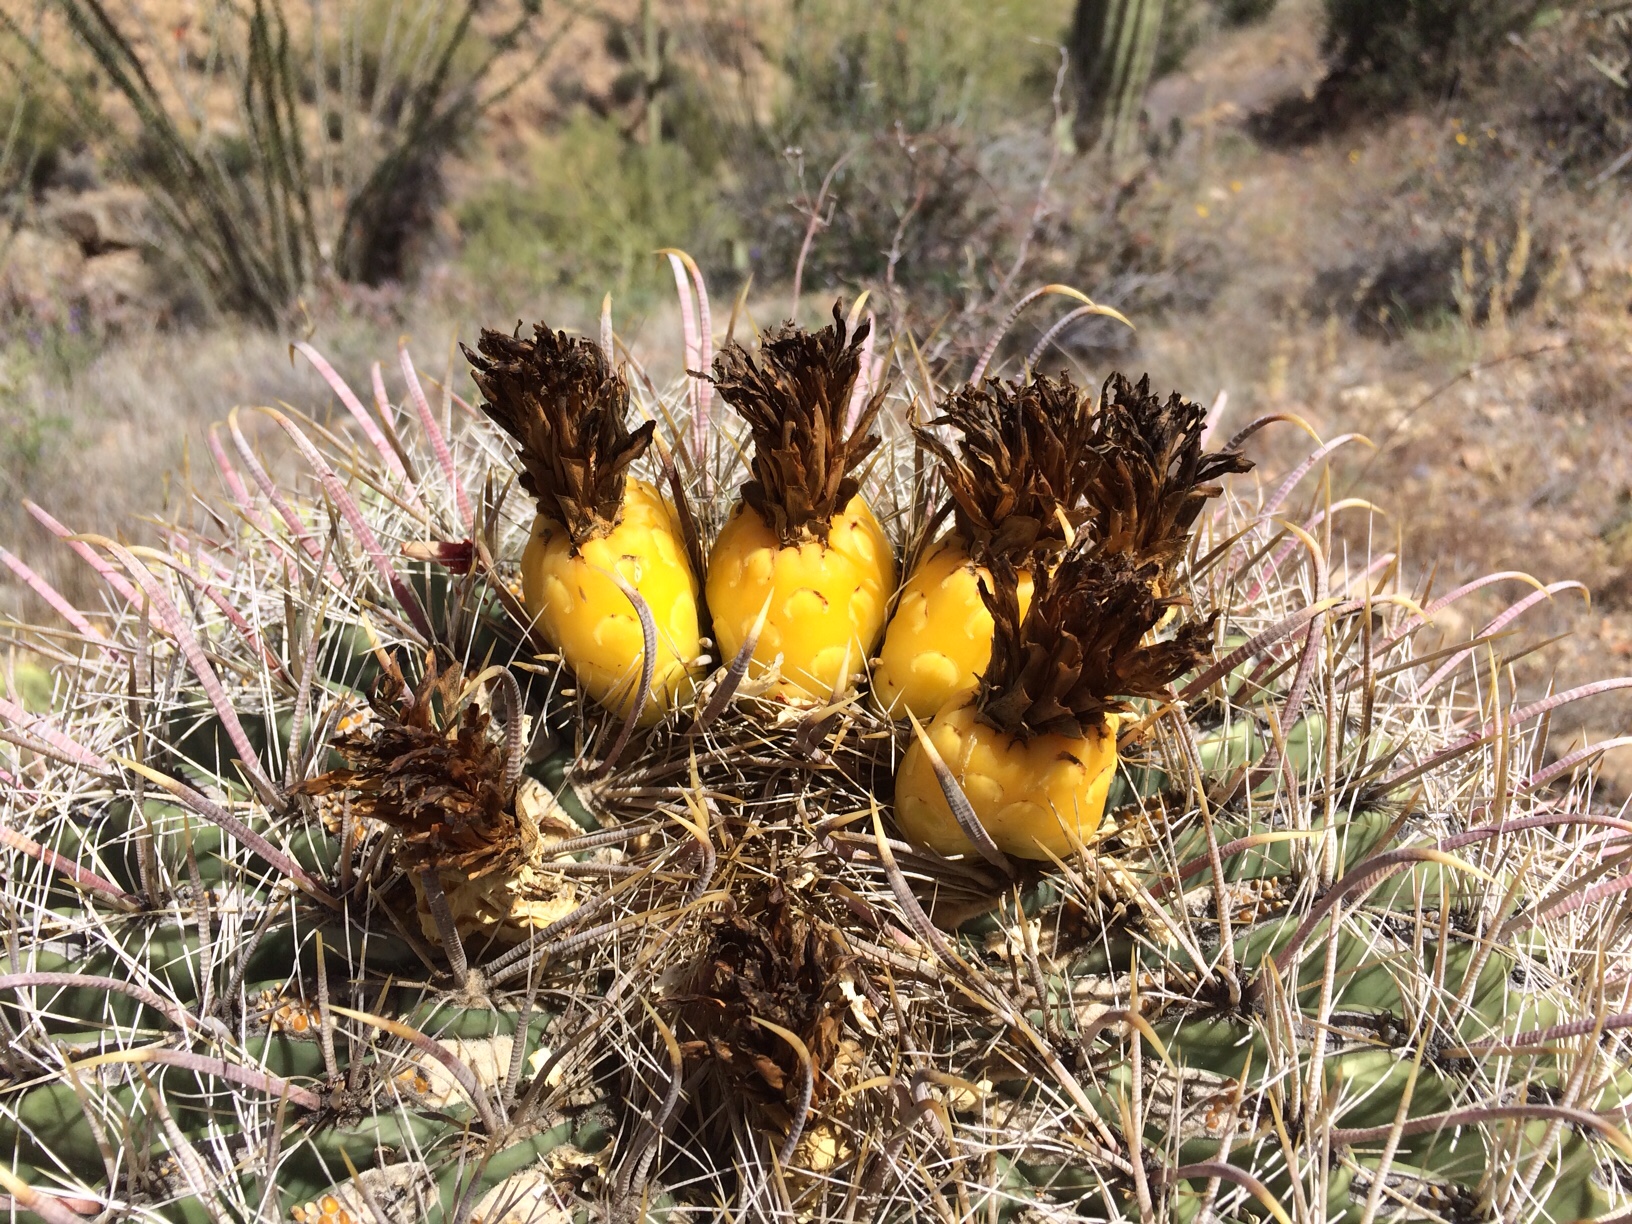 Pineapple cactus